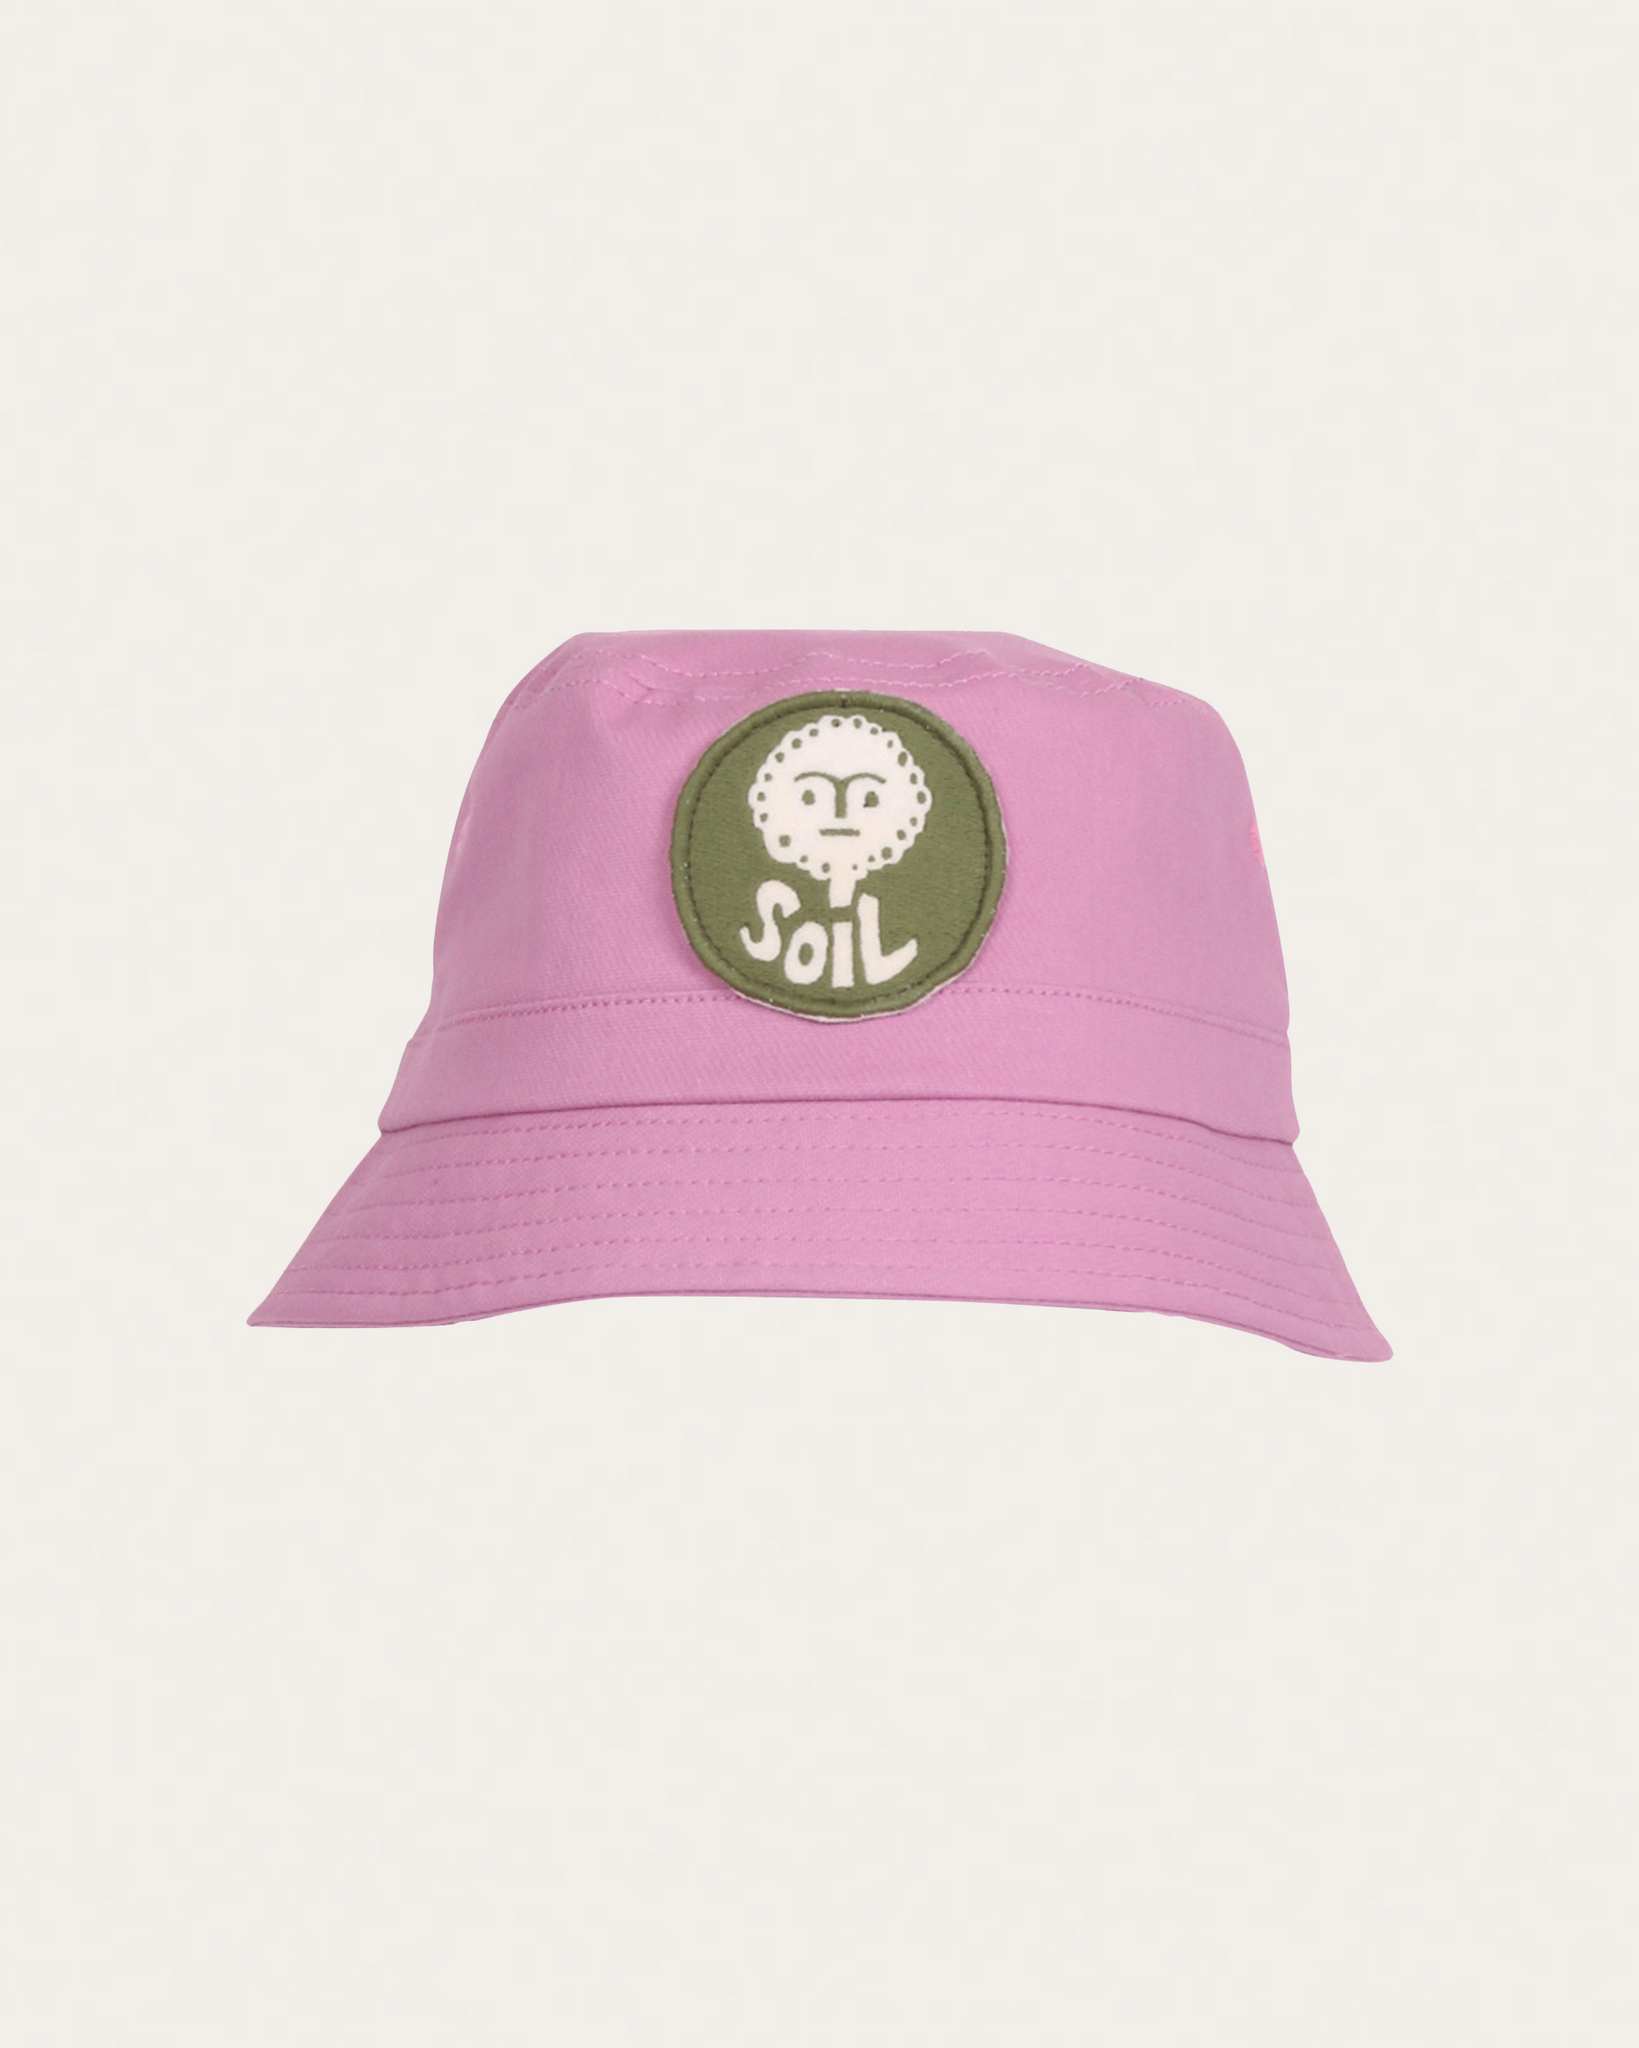 Toby Hat Cotton Blend Pink